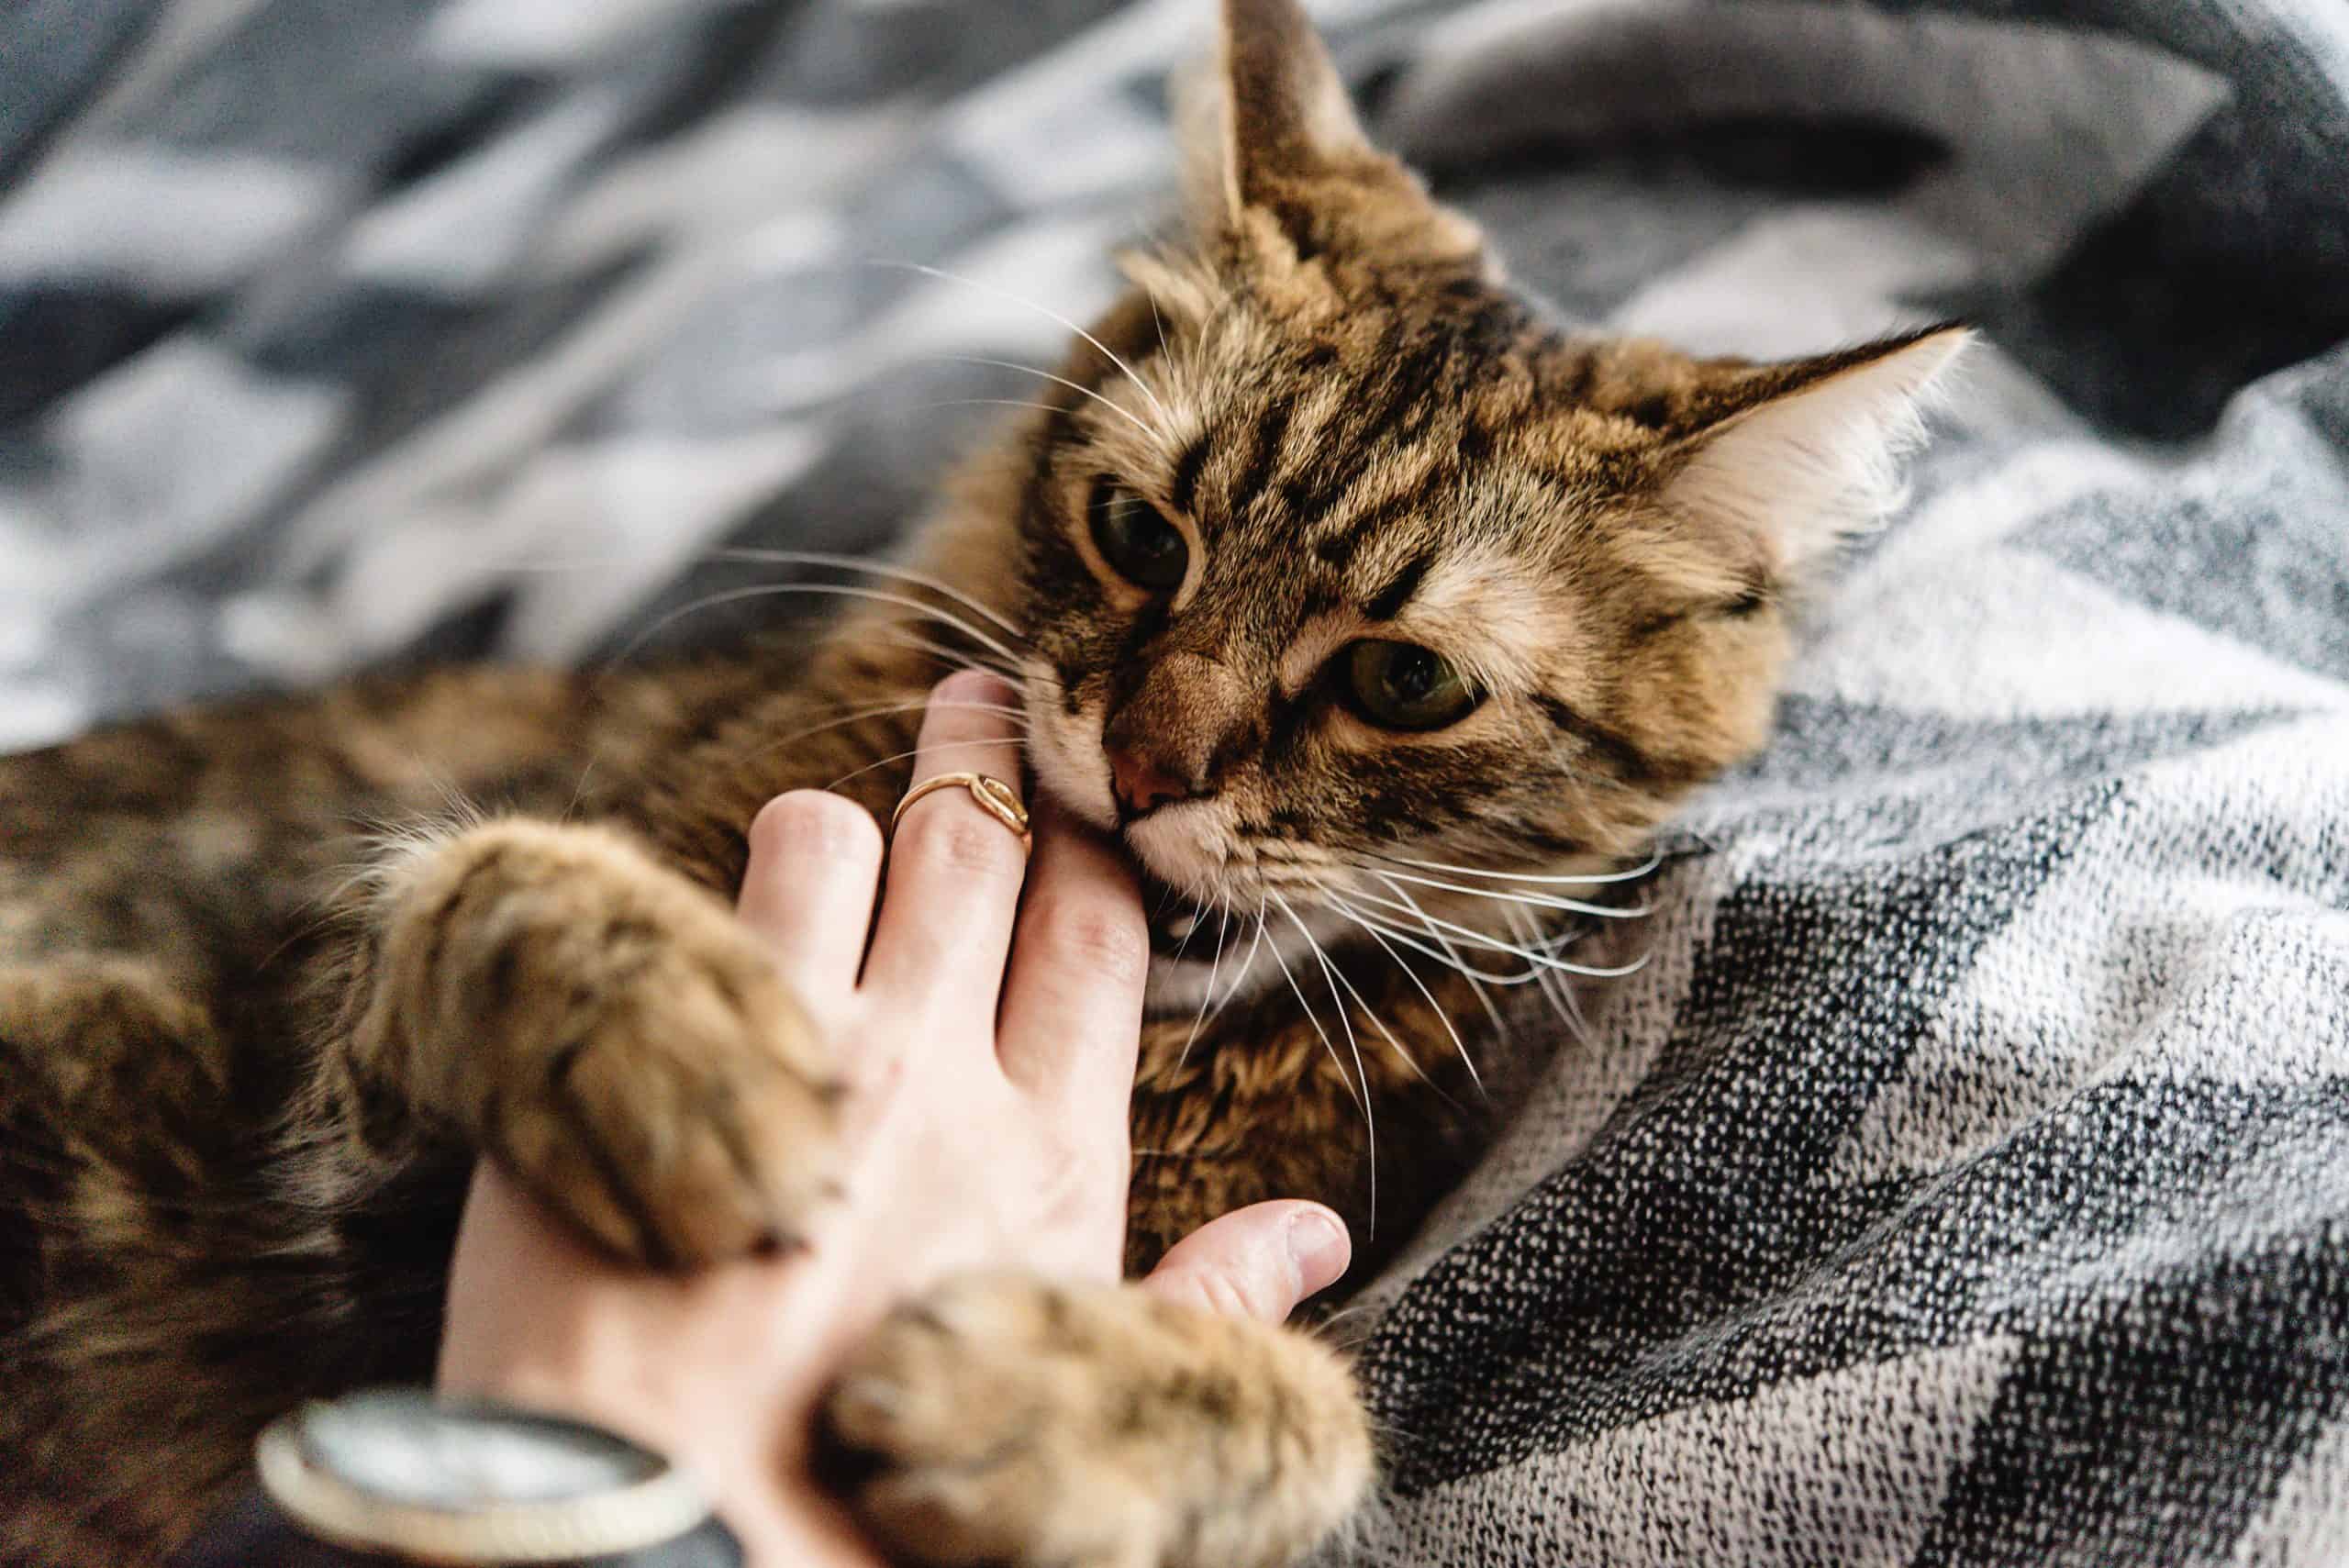 Cat scratches hand